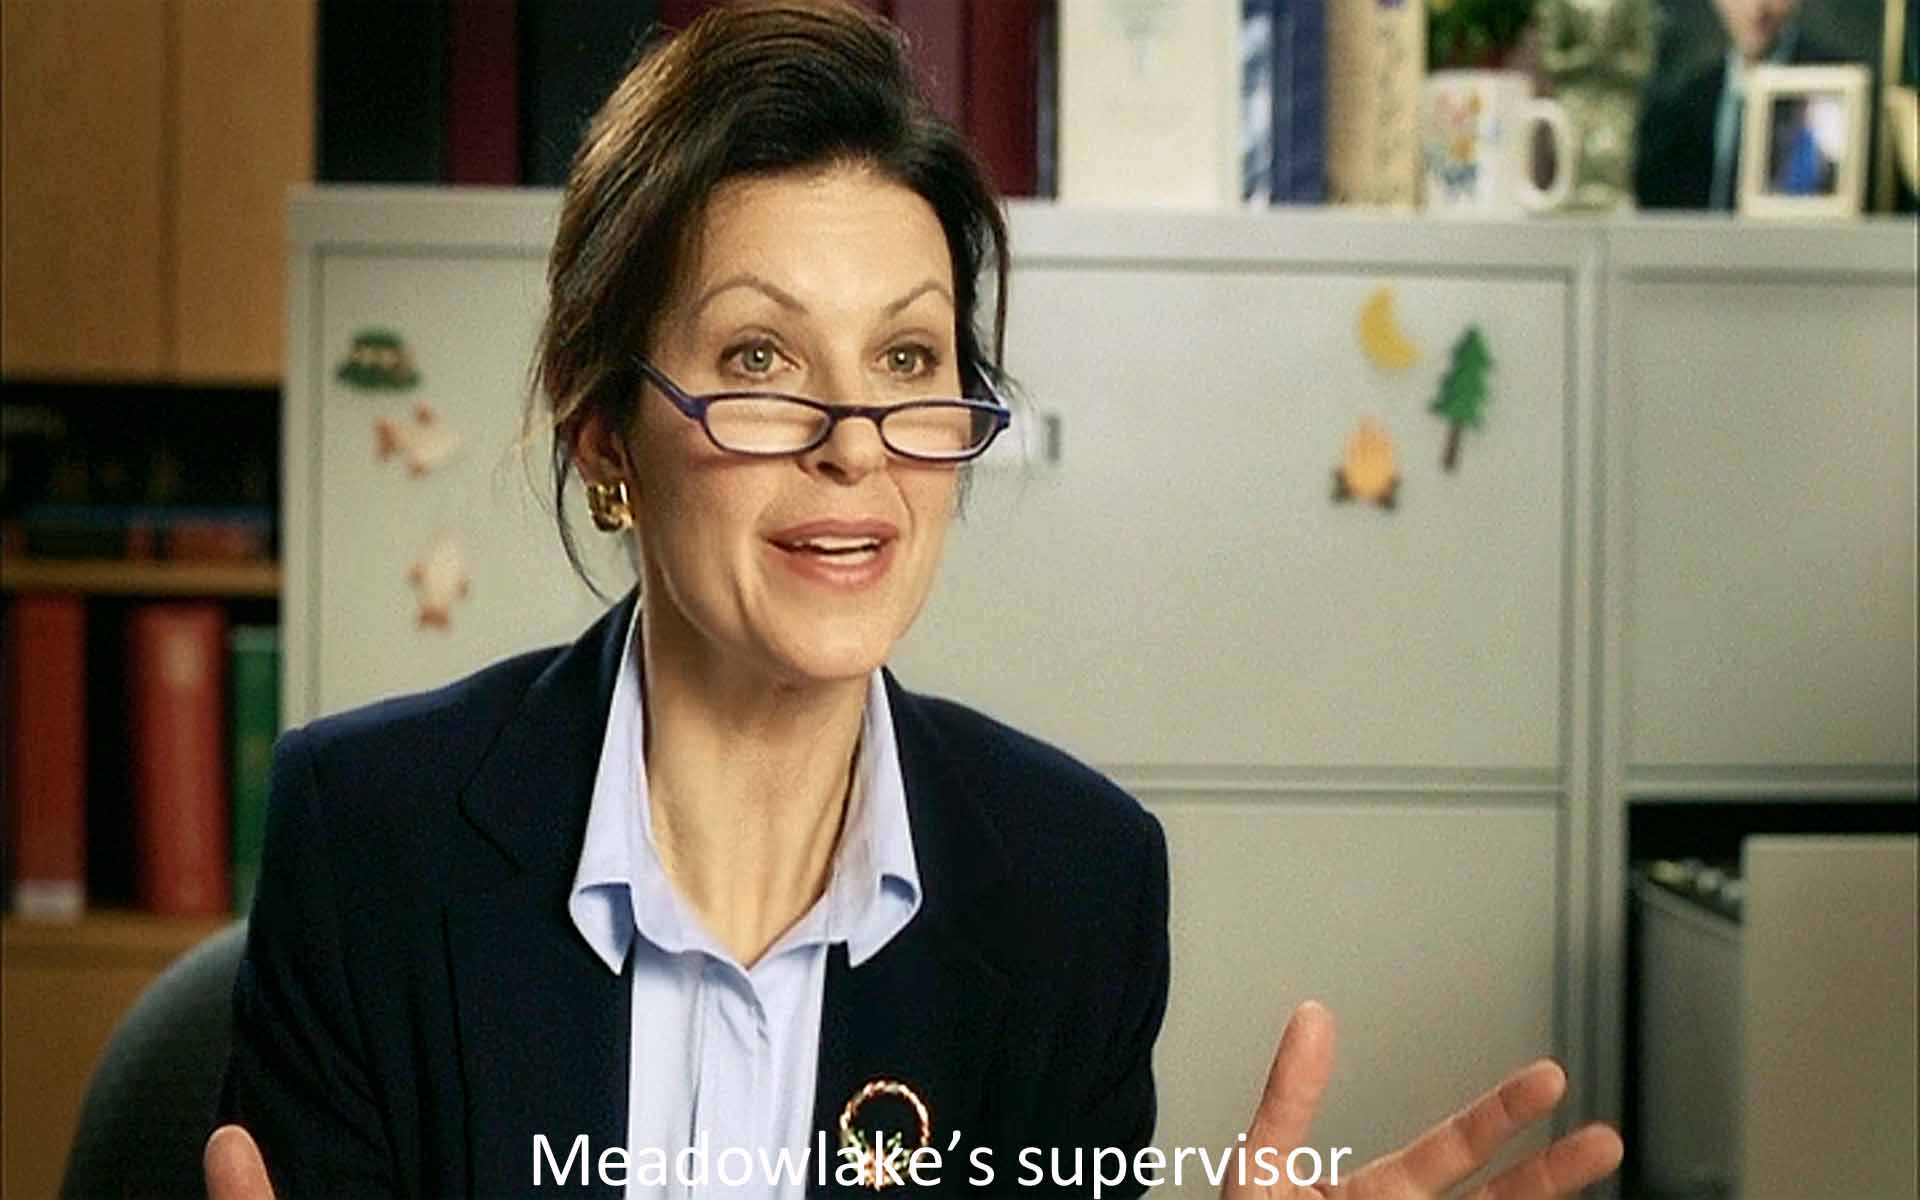 Meadowlake's supervisor